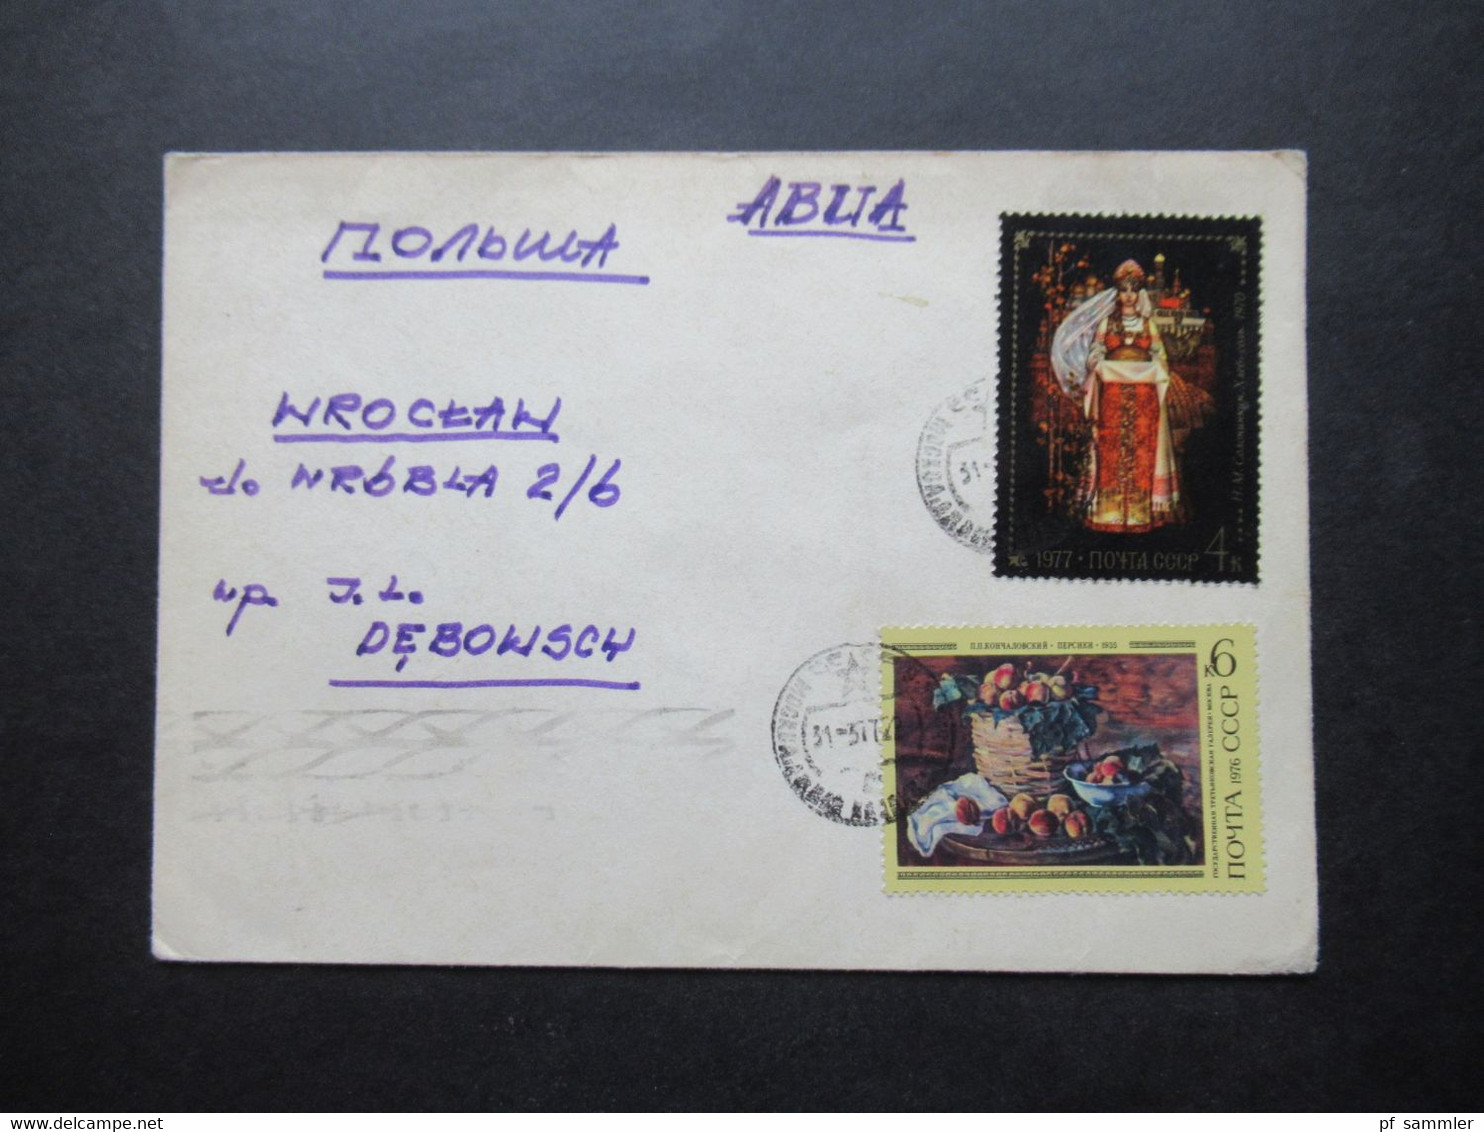 UdSSR / Russland / Sowjetunion 1977 MOtivmarken MiF Beleg Nach Warschau Mit Ank. Stempel Rückseitig - Covers & Documents